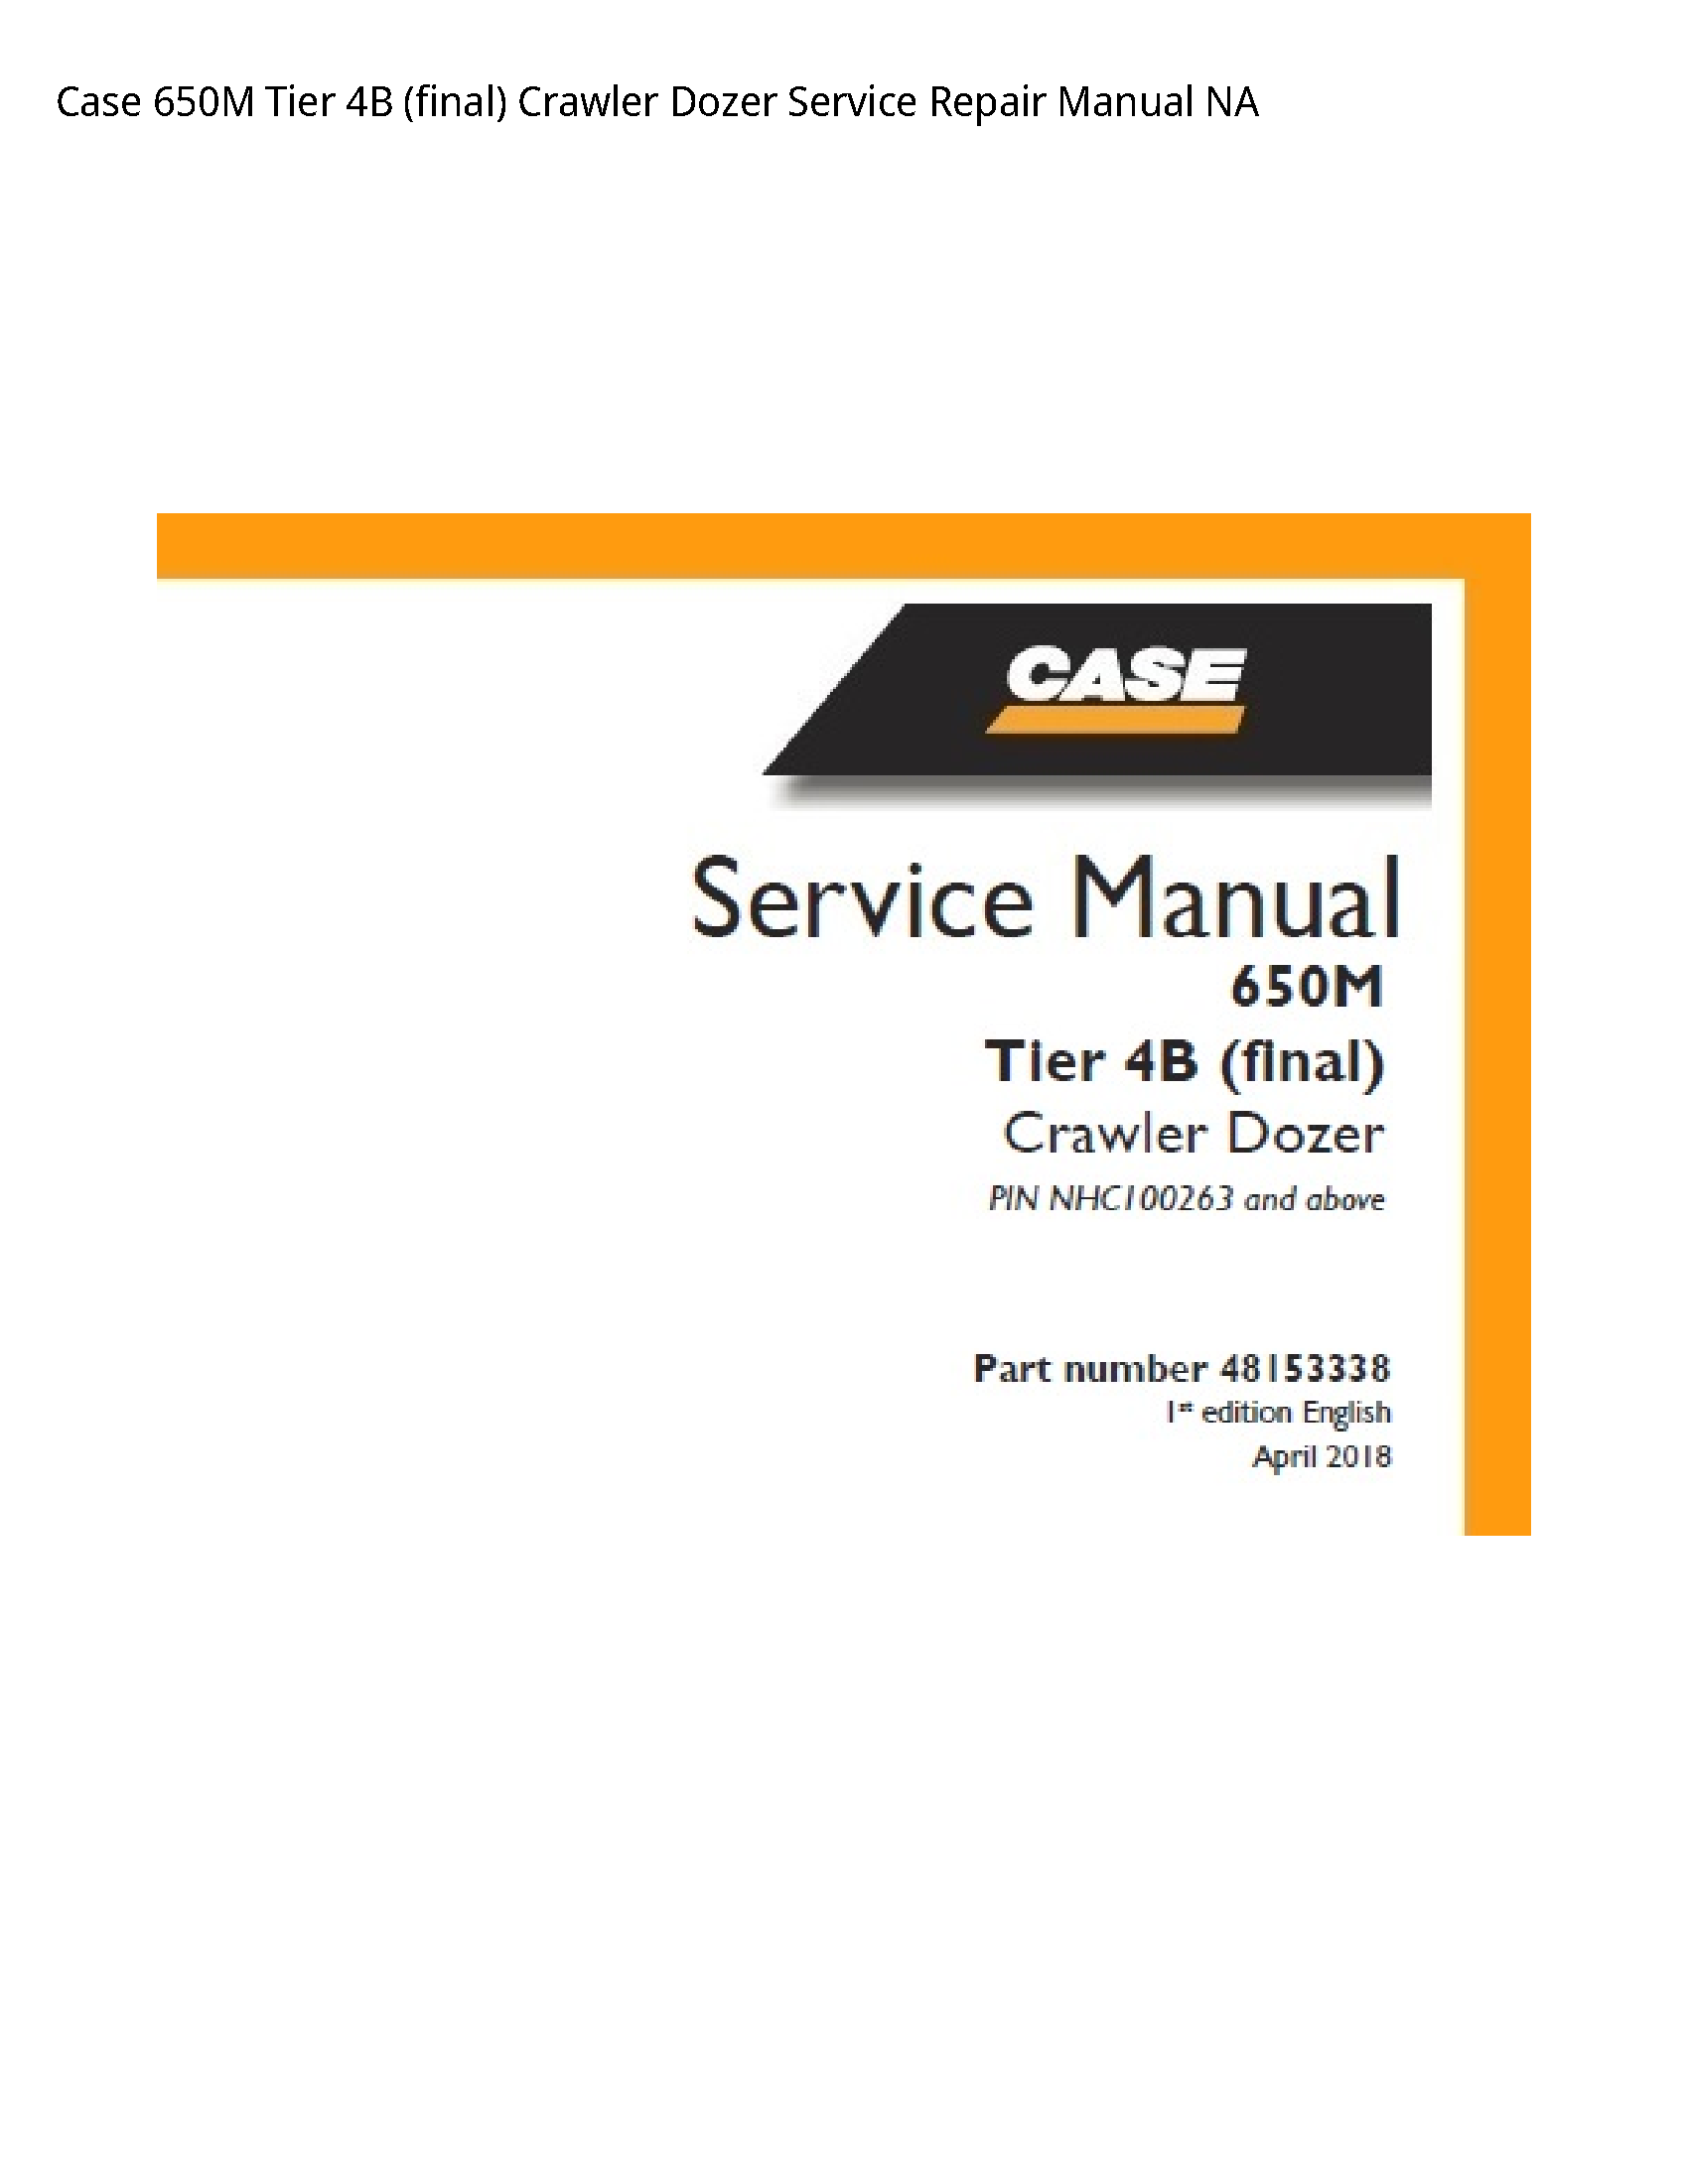 Case/Case IH 650M Tier (final) Crawler Dozer manual